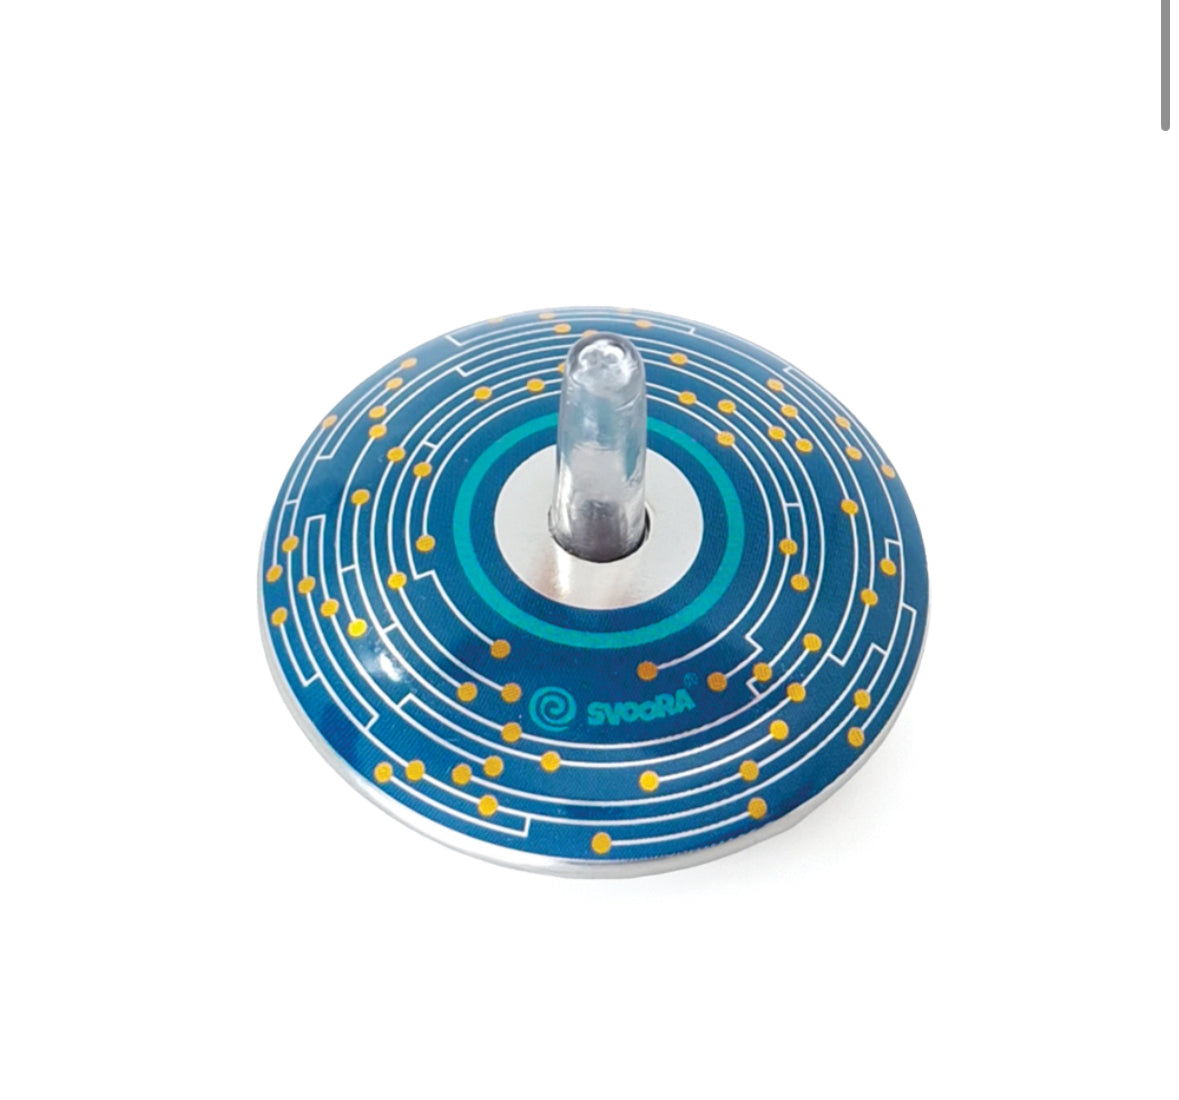 Mini Retro Spinning Tin Top Hitech in 3 designs